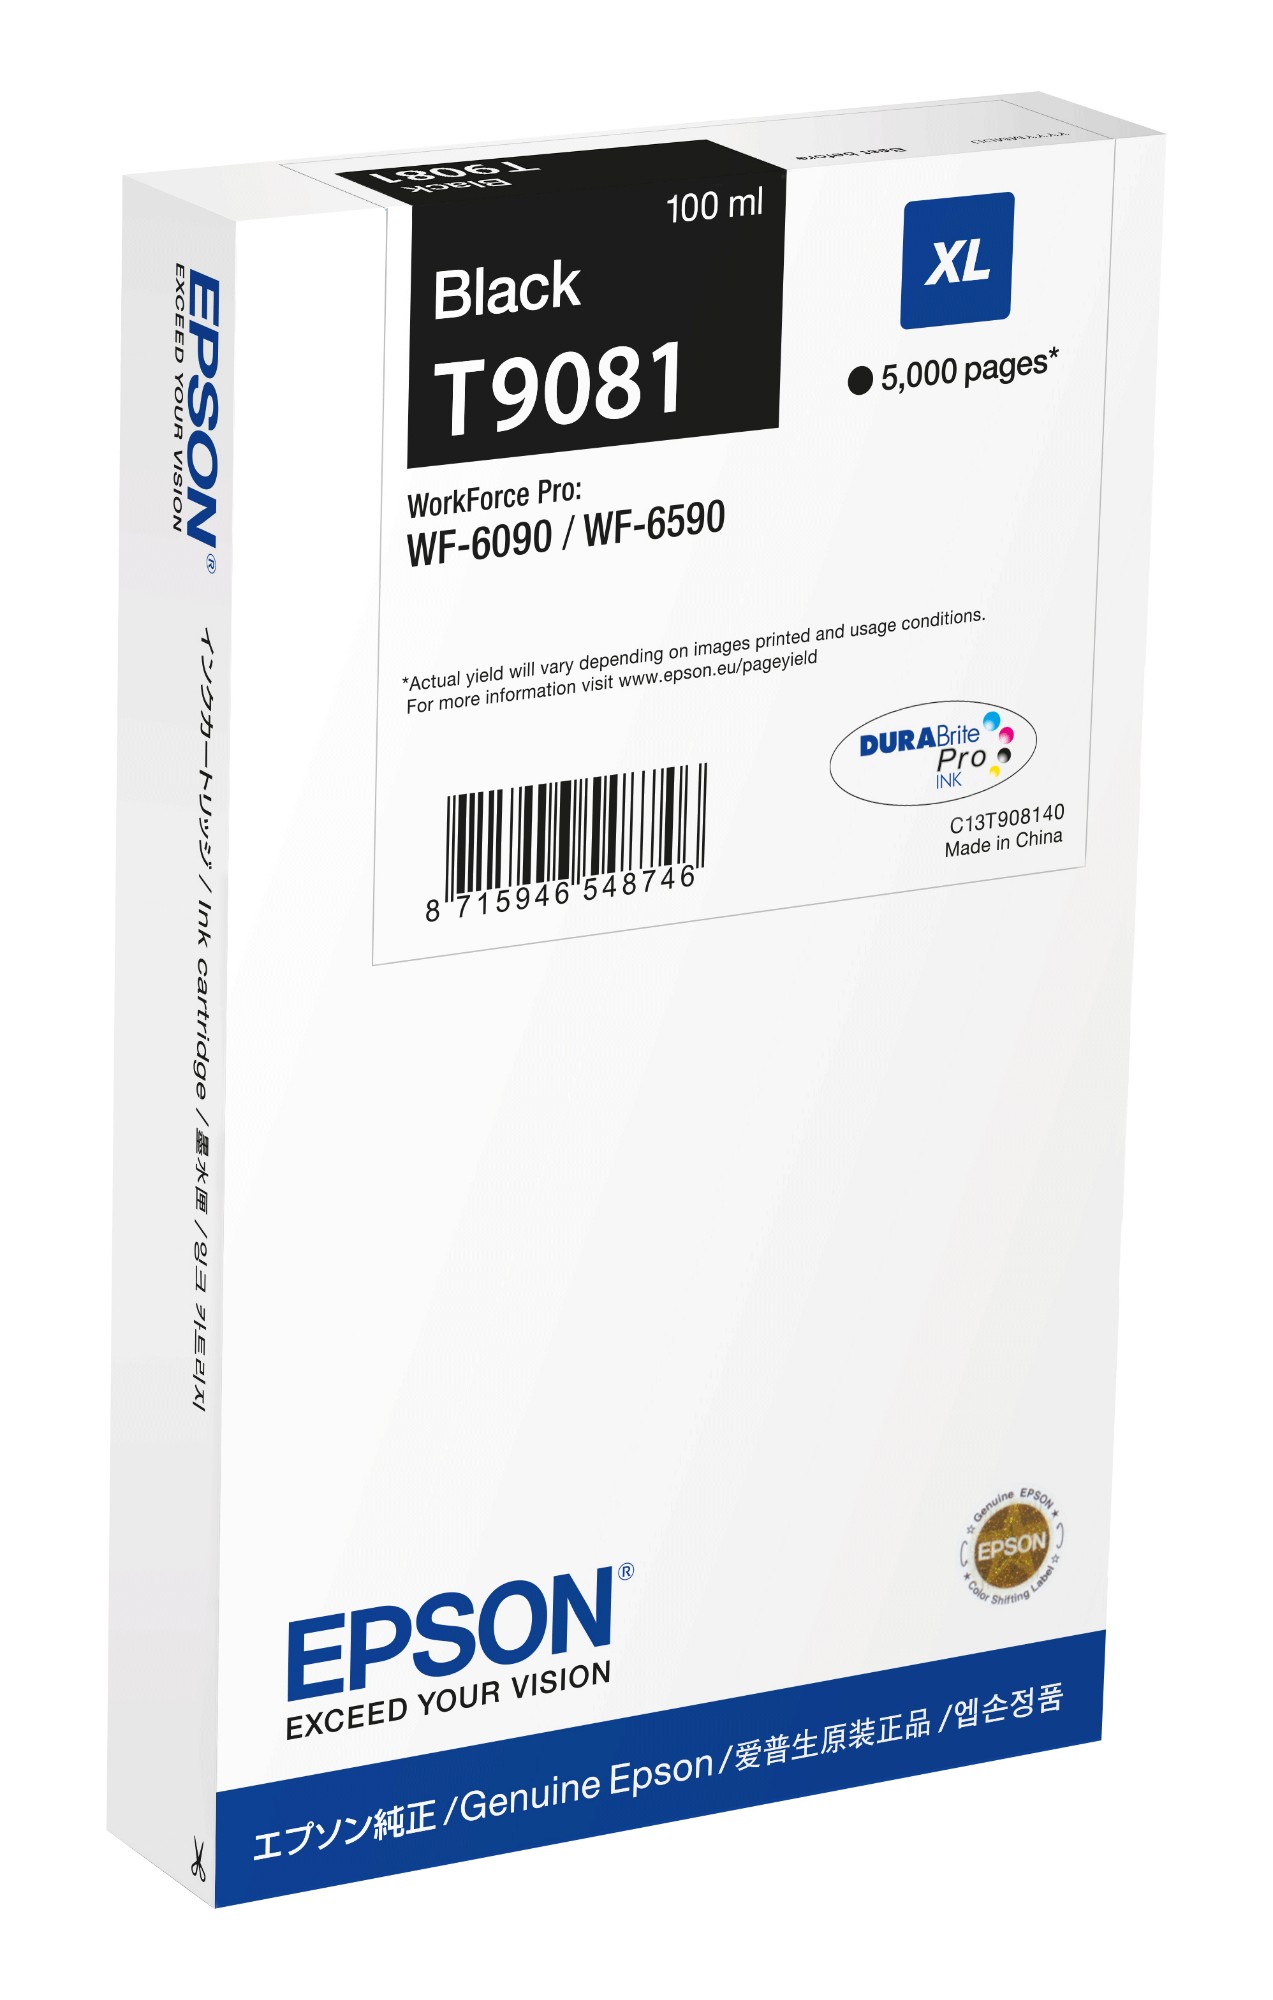 Epson C13T908140|T9081 Ink cartridge black XL, 5K pages, Content 100 ml for WorkForce Pro WF-6090 DW/6590 DWF